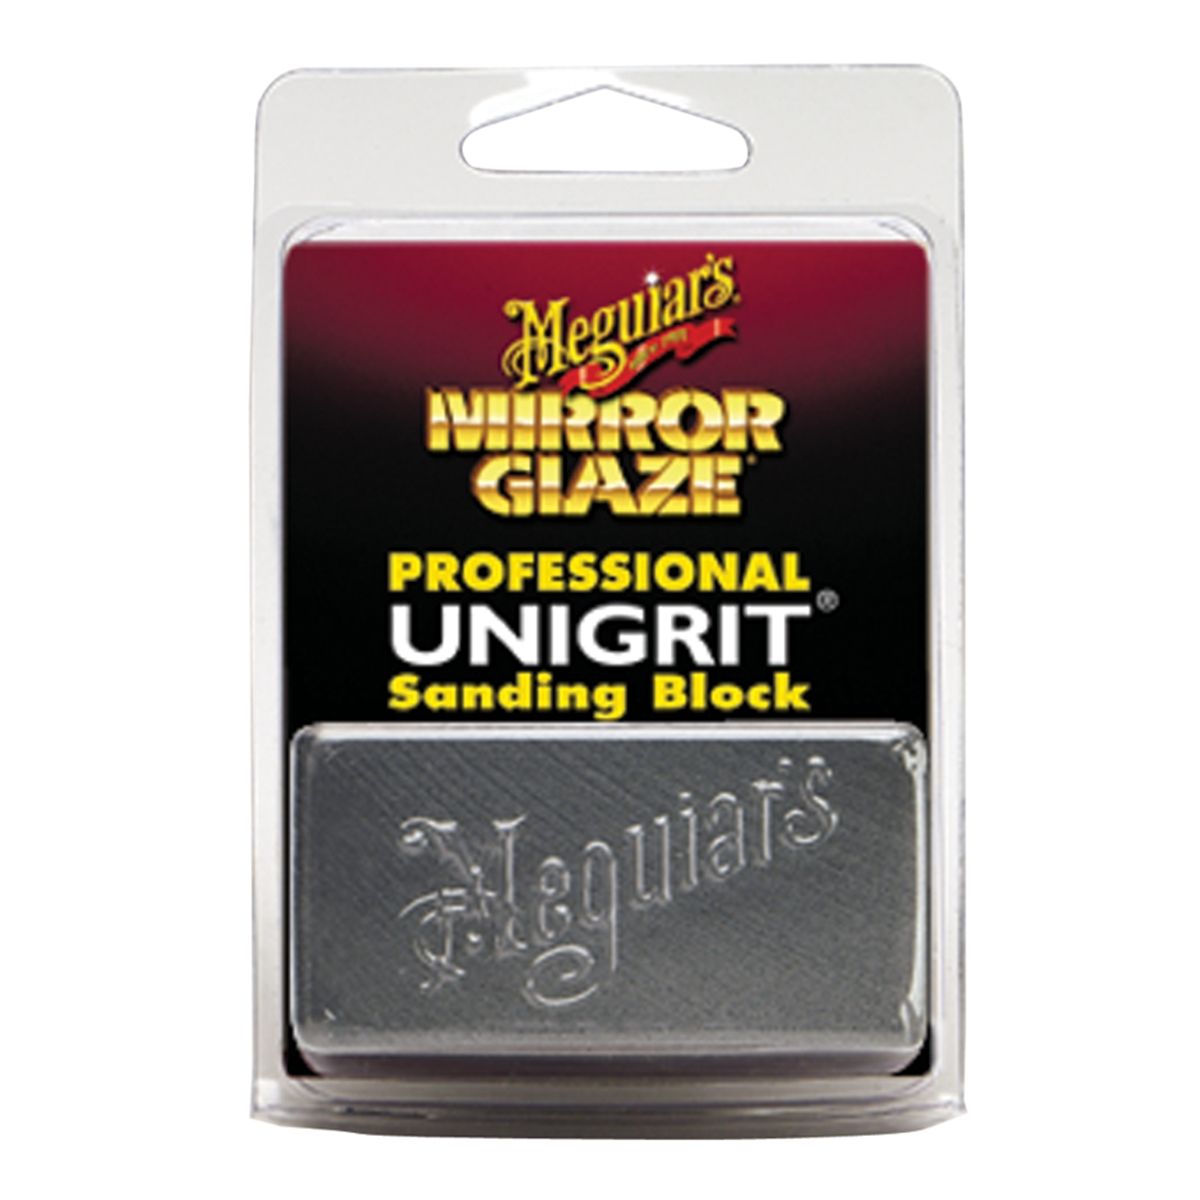 Unigrit(TM) Sanding Block - 2000 Grit